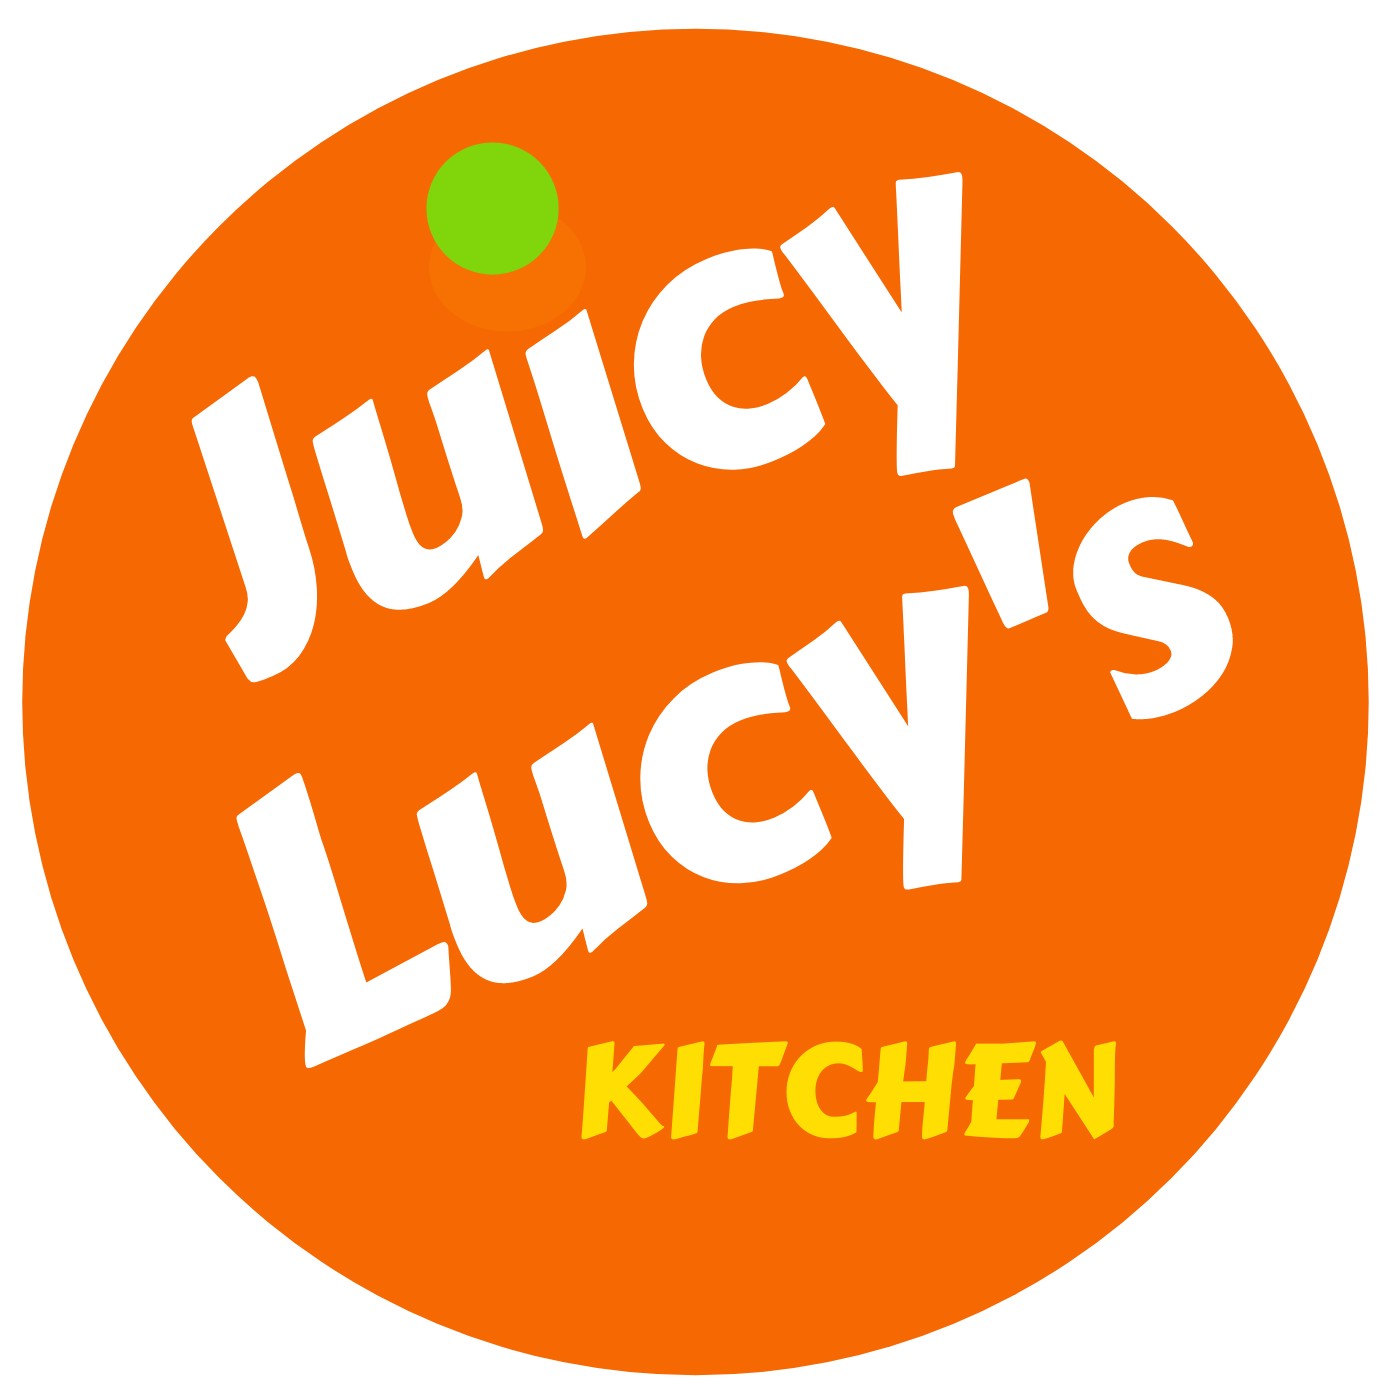 Juicy Lucy's Kitchen